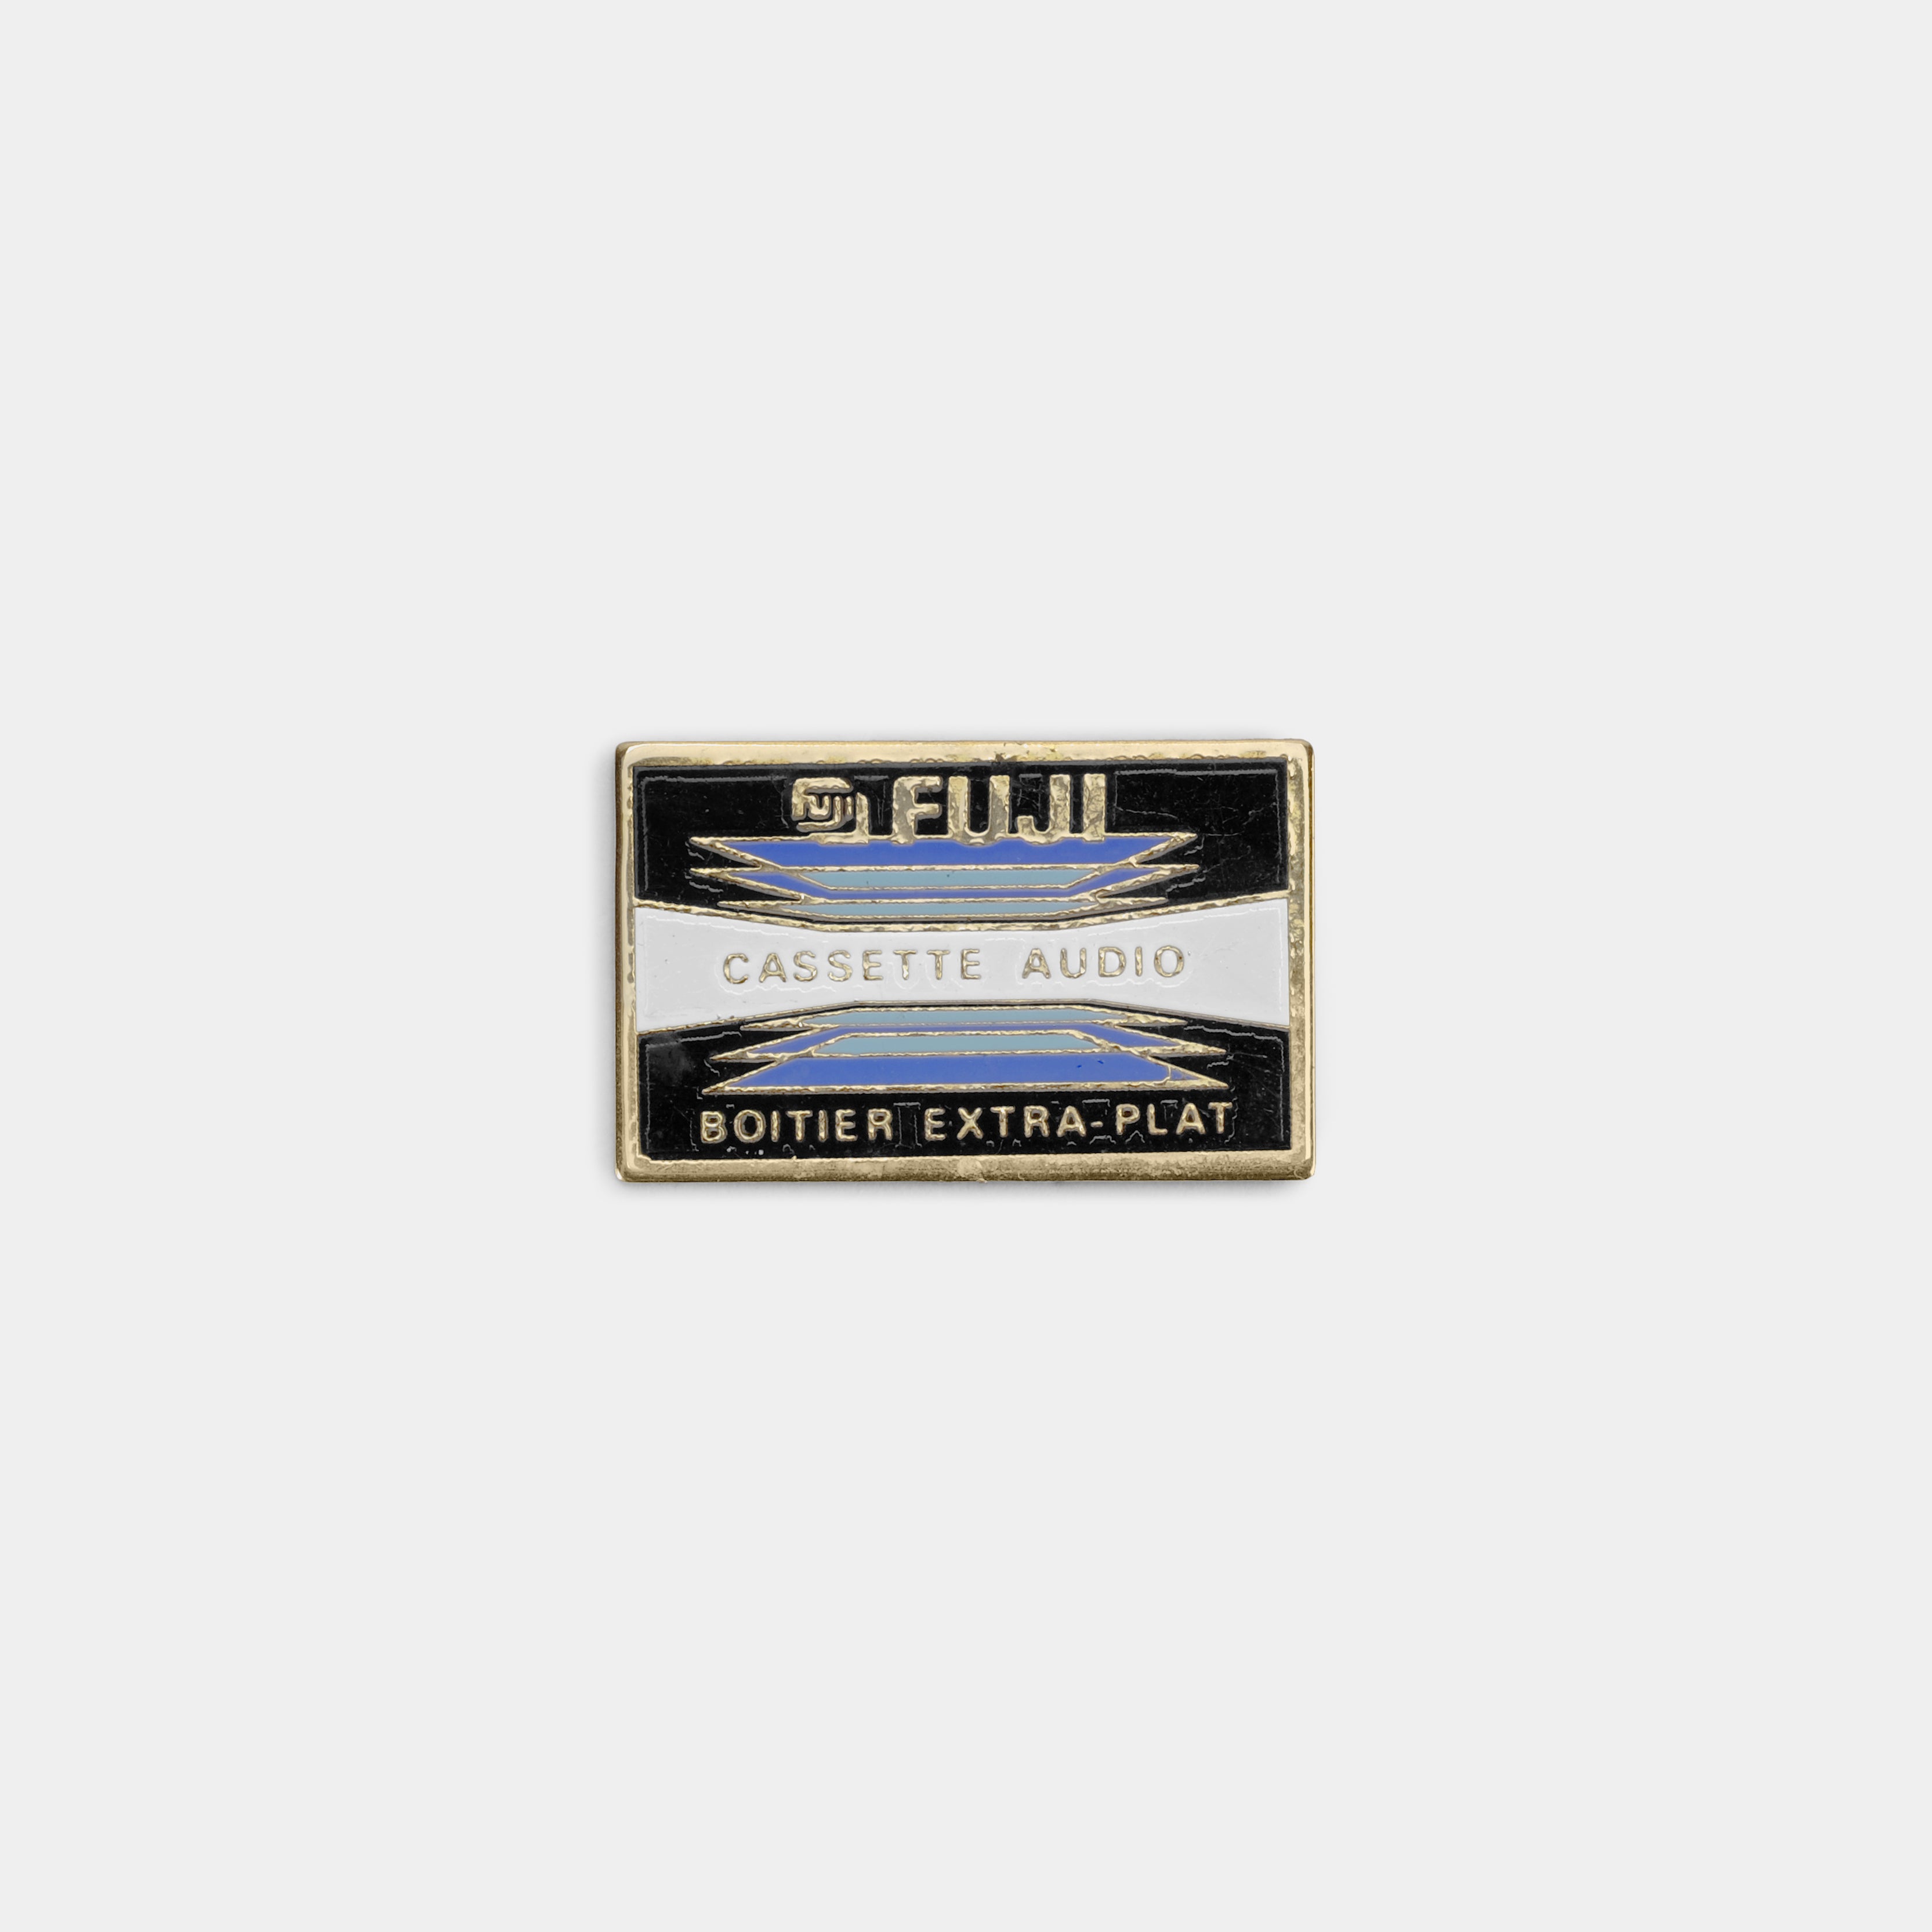 Fujifilm Cassette Audio Boitier Extra-Plat Vintage Enamel Pin